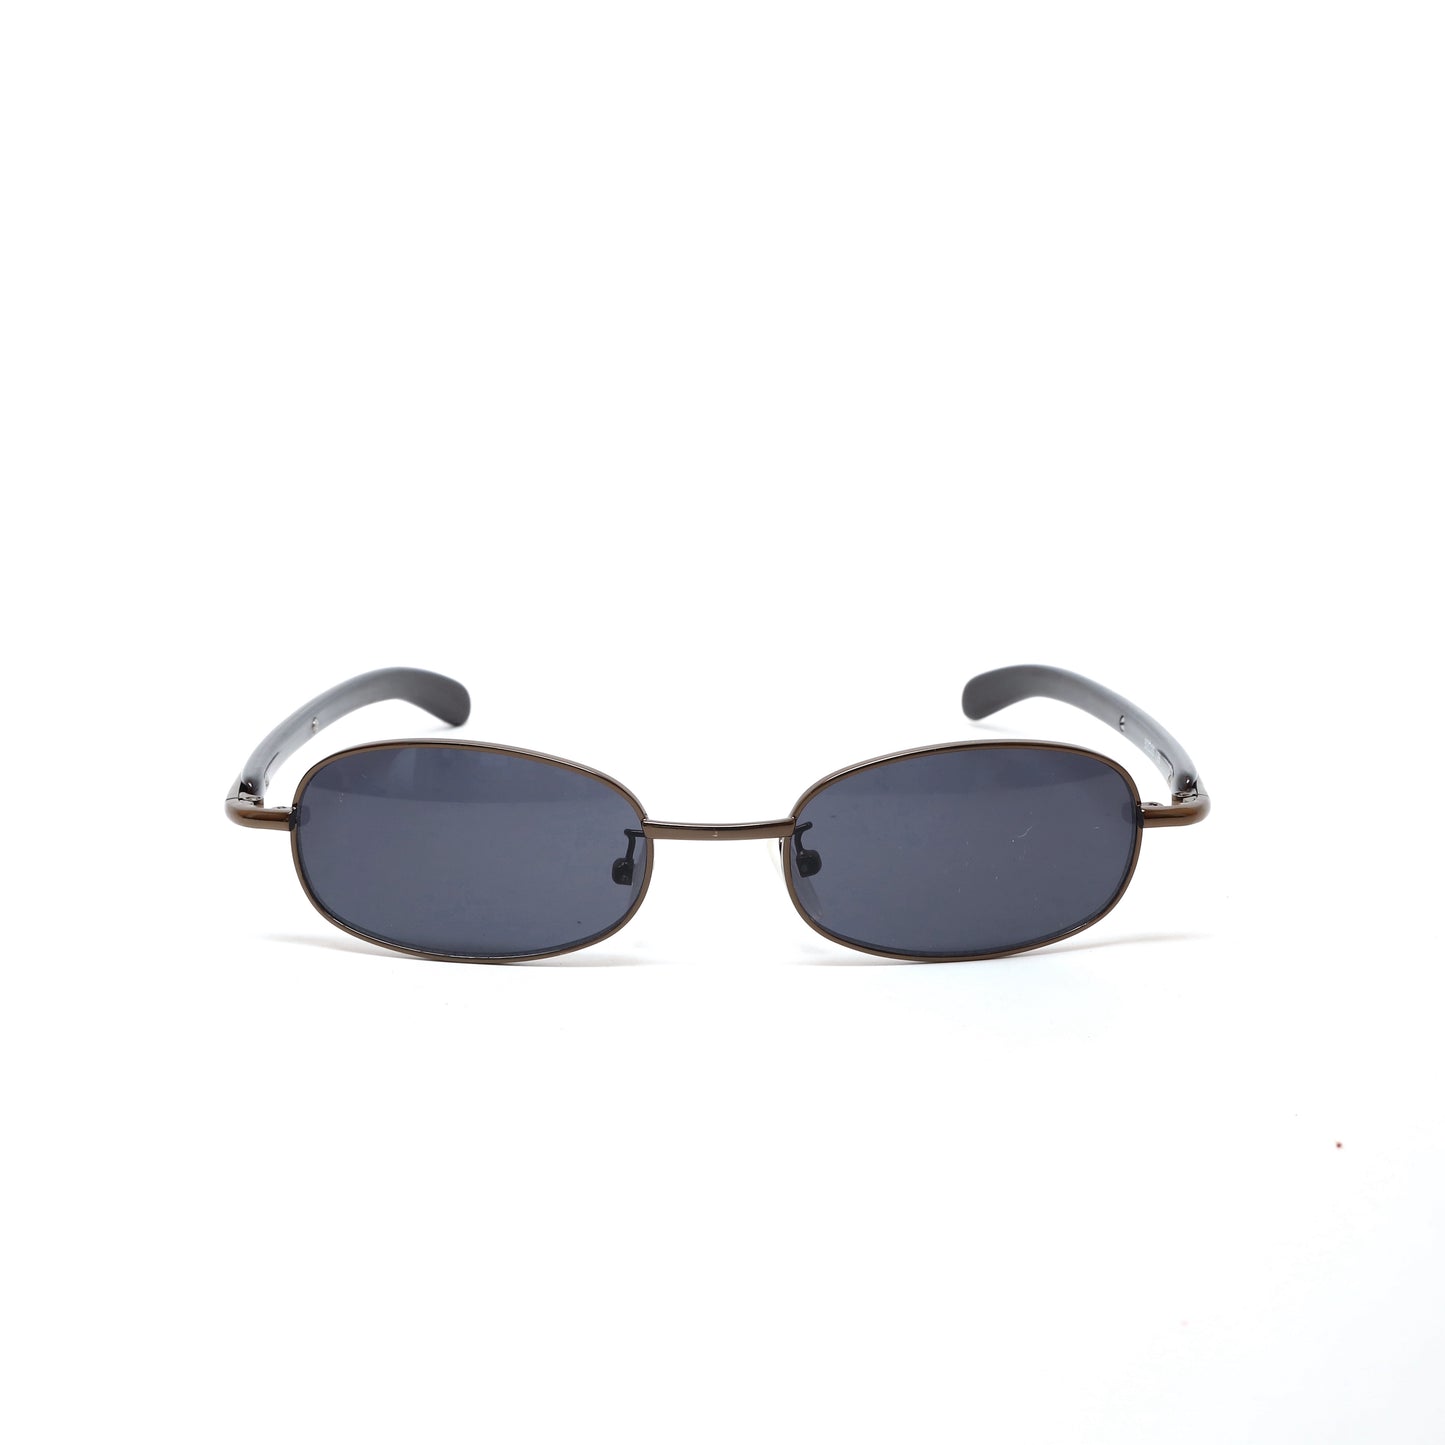 Vintage 90s Small Size Narrow Frame Wraparound  Sunglasses - Bronze